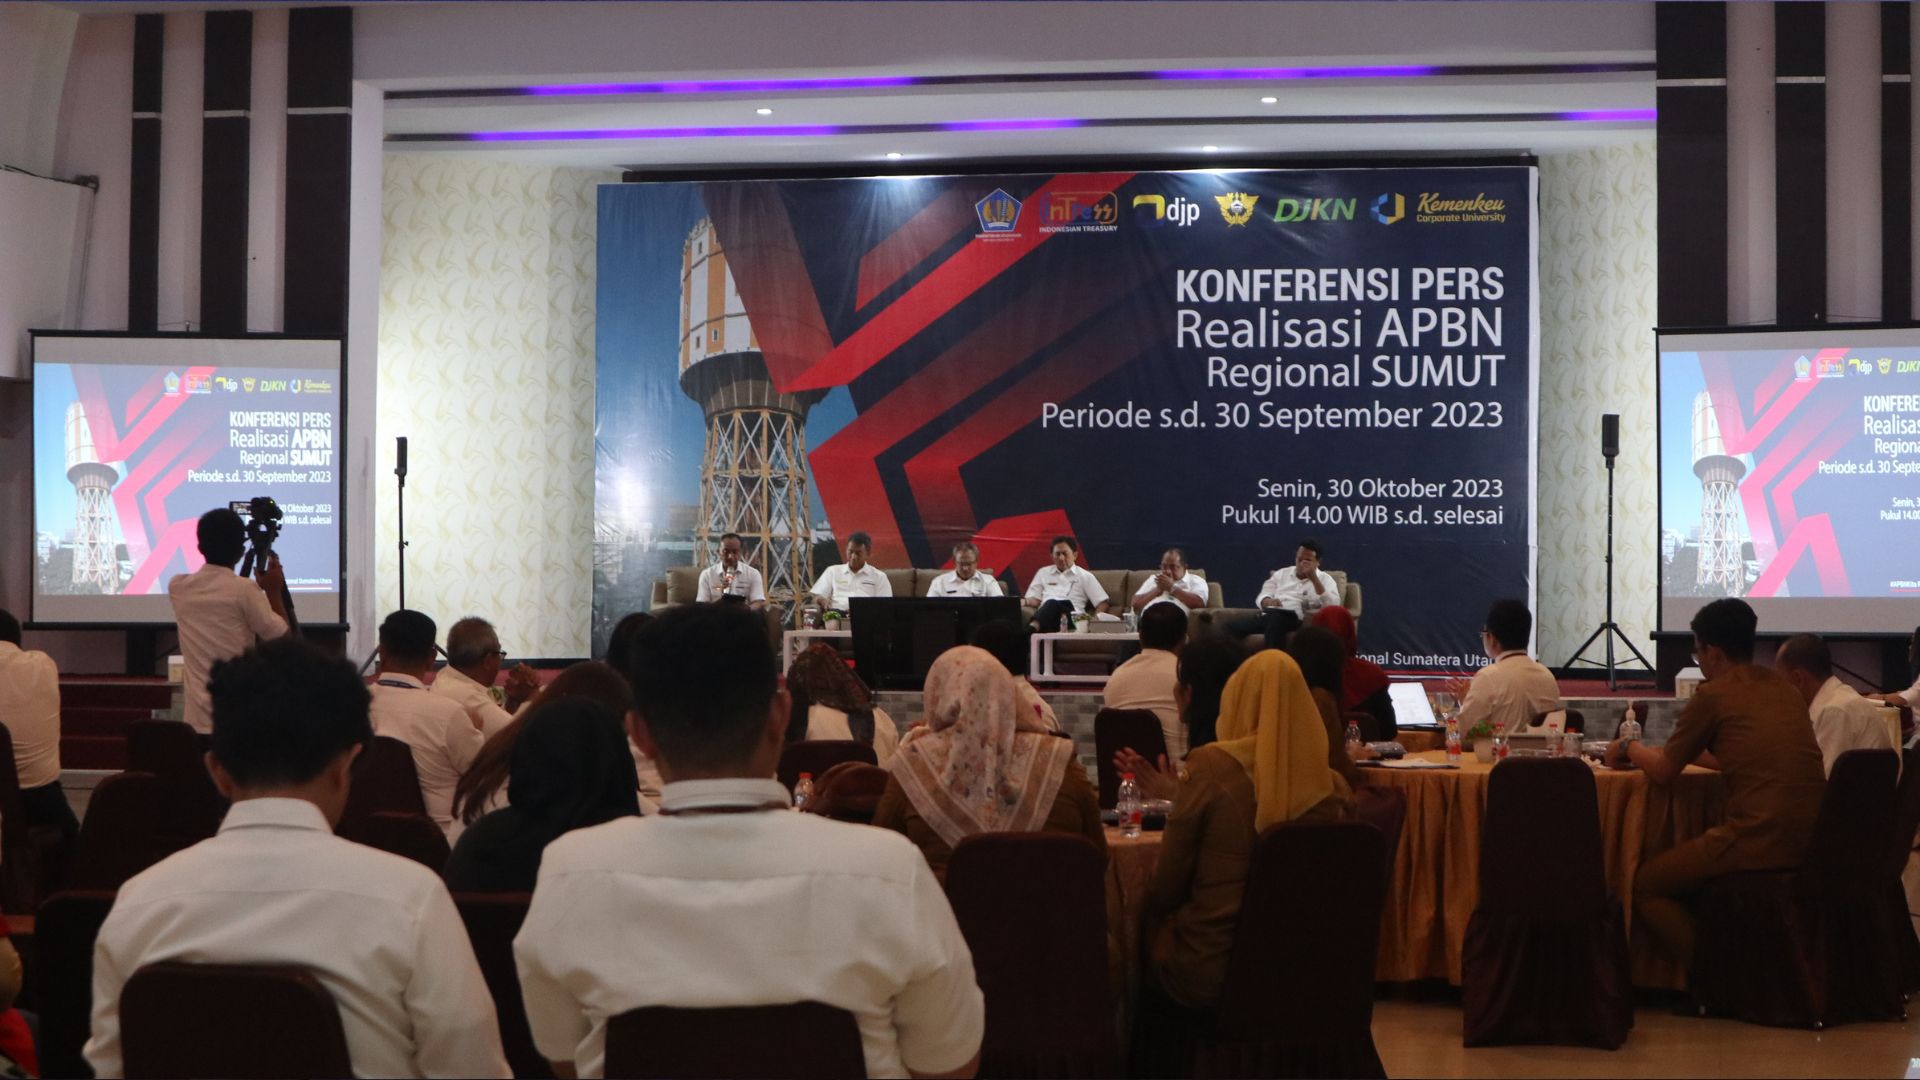 Realisasi APBN Regional Sumatera Utara Periode s.d. 30 September 2023